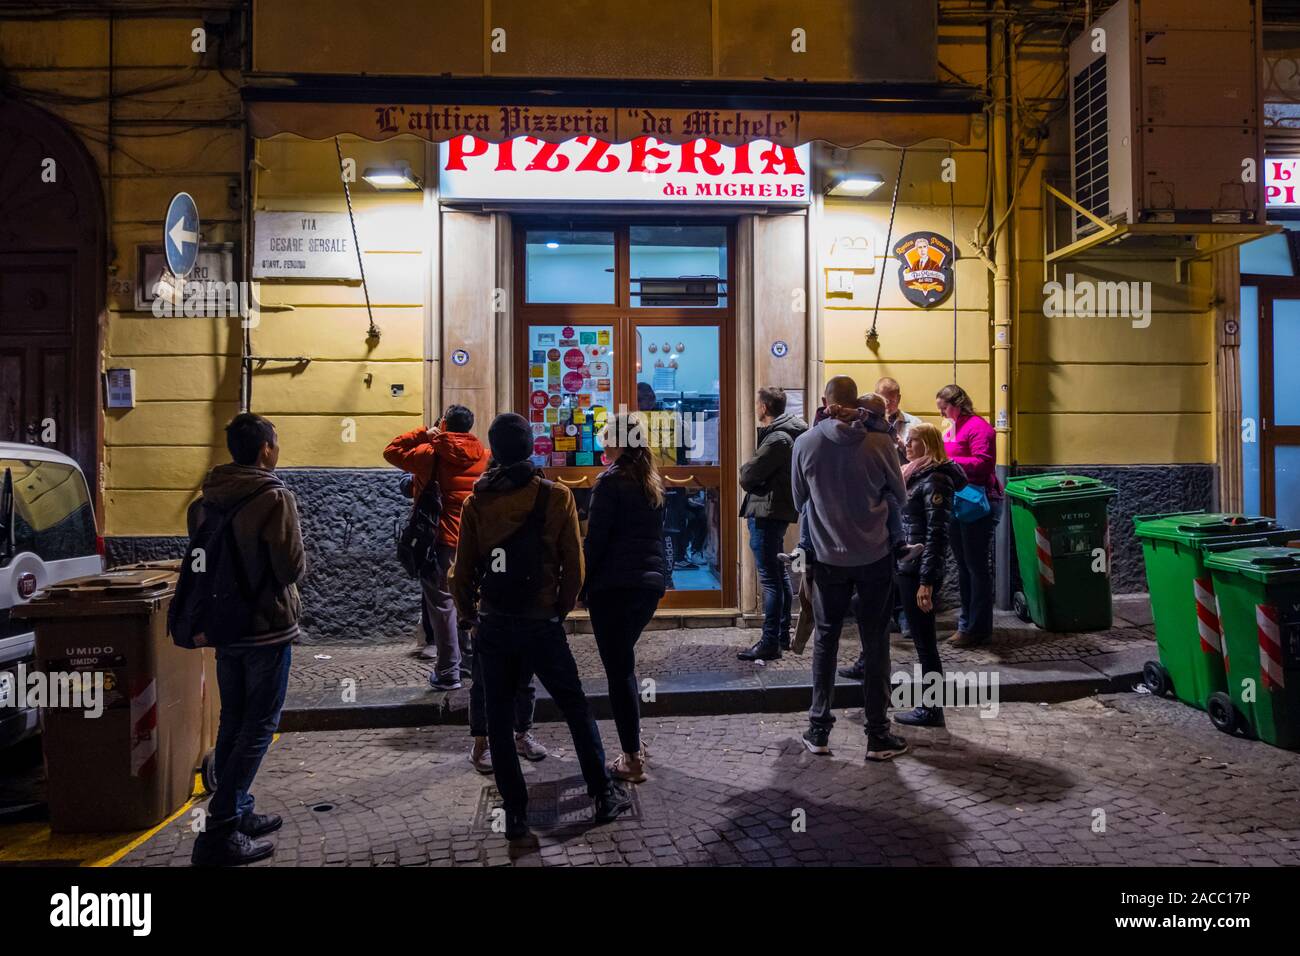 Queue outside Pizzeria da Michele, Forcella, Naples, Italy Stock Photo